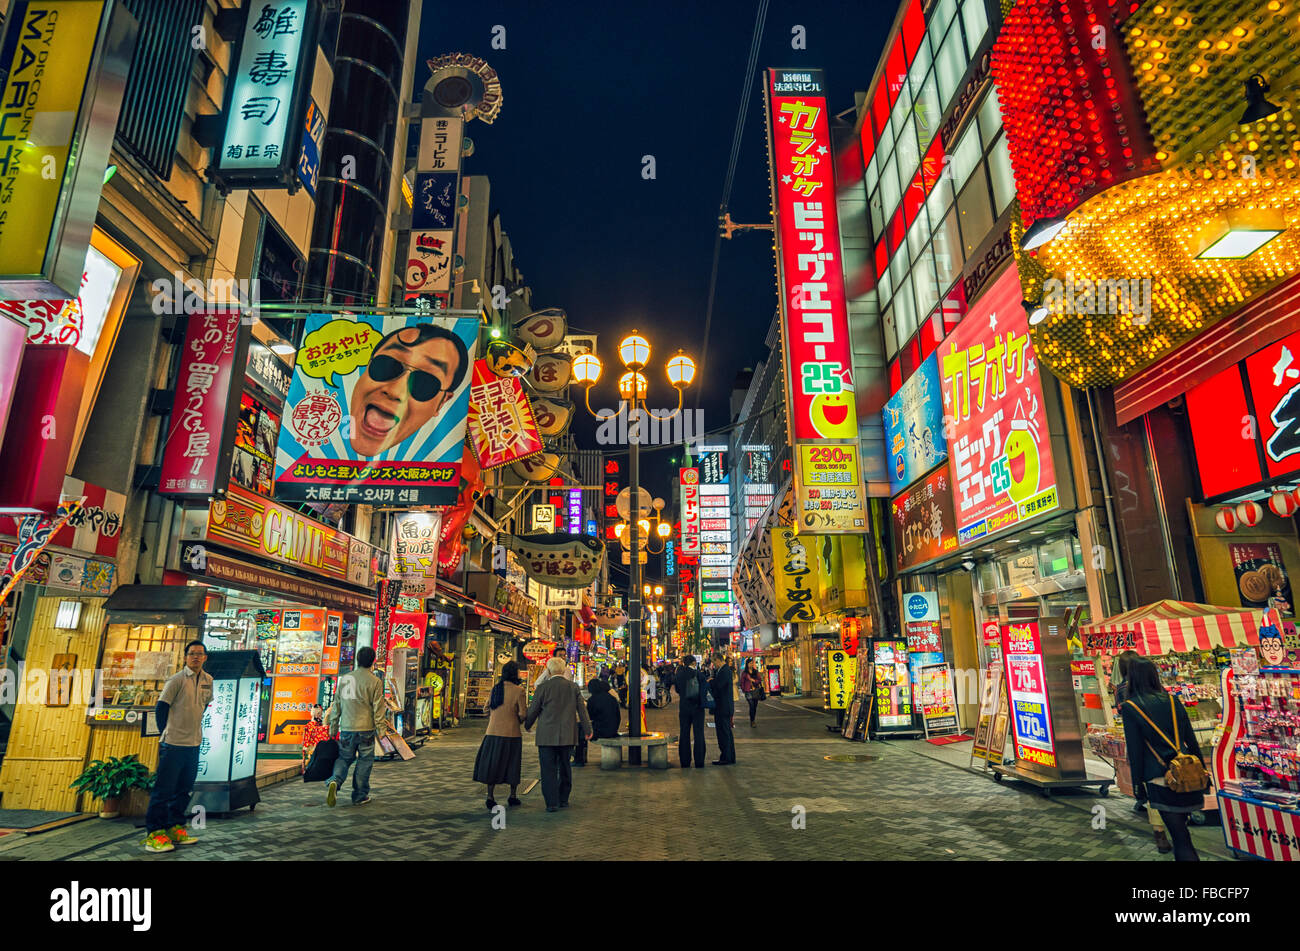 Nighttime street scene in the colourful Namba district of Osaka, Japan. Stock Photo